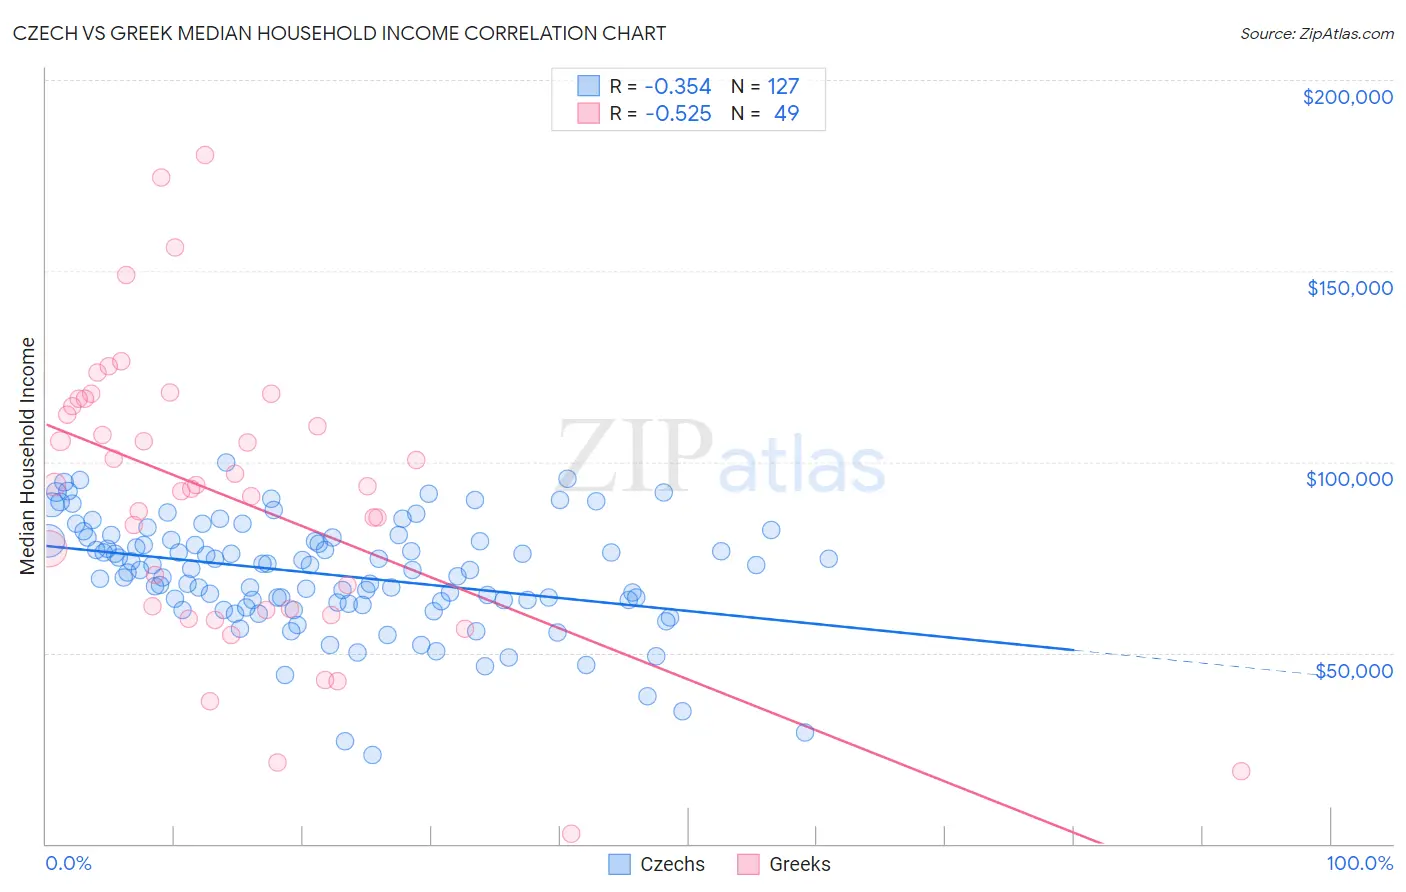 Czech vs Greek Median Household Income